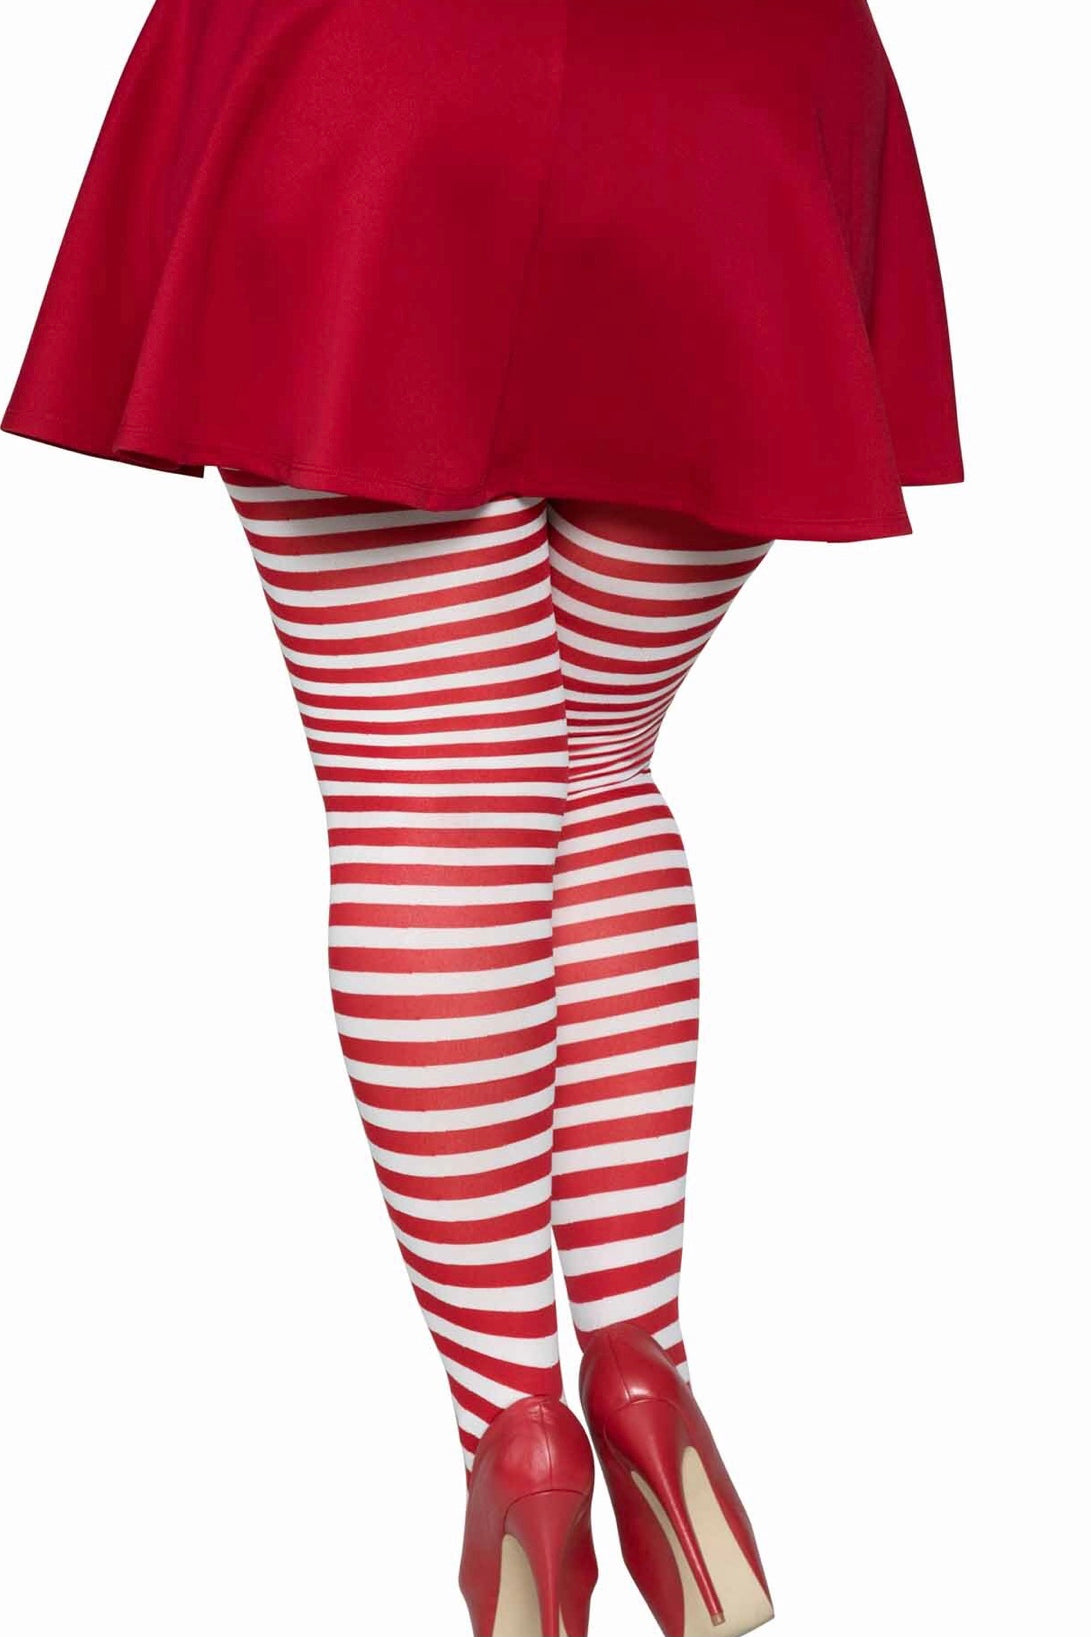 Striped tights white/red - CurvynBeautiful 